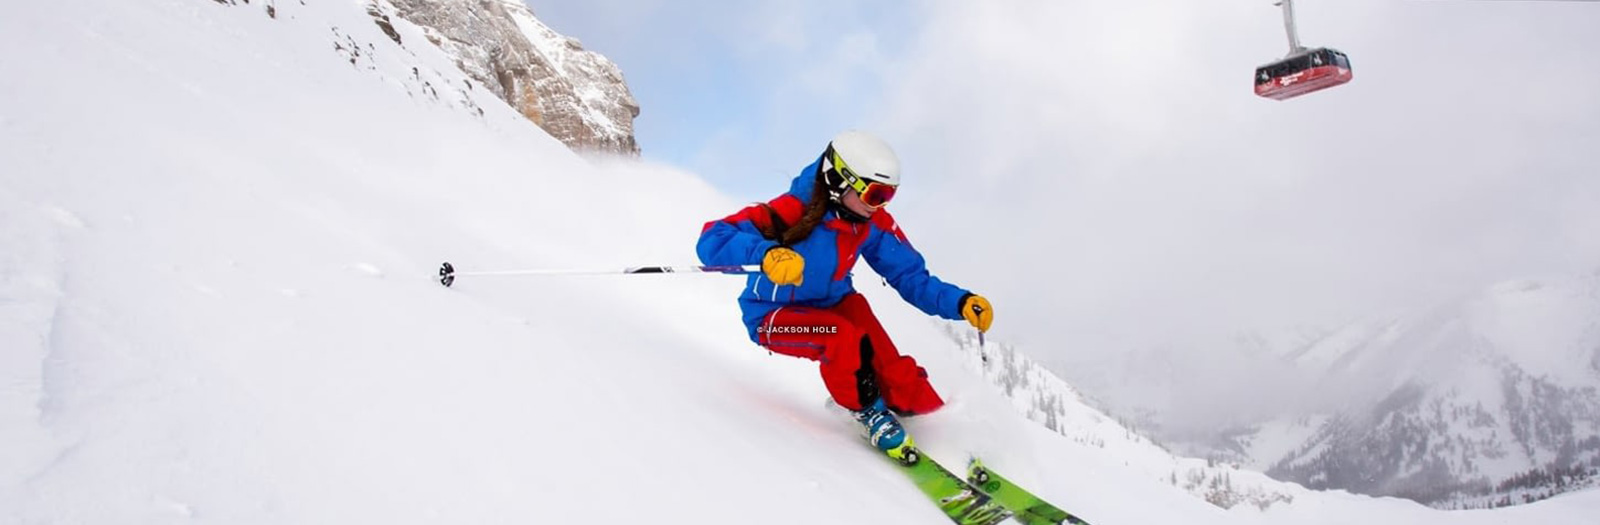 deals on expert ski resorts